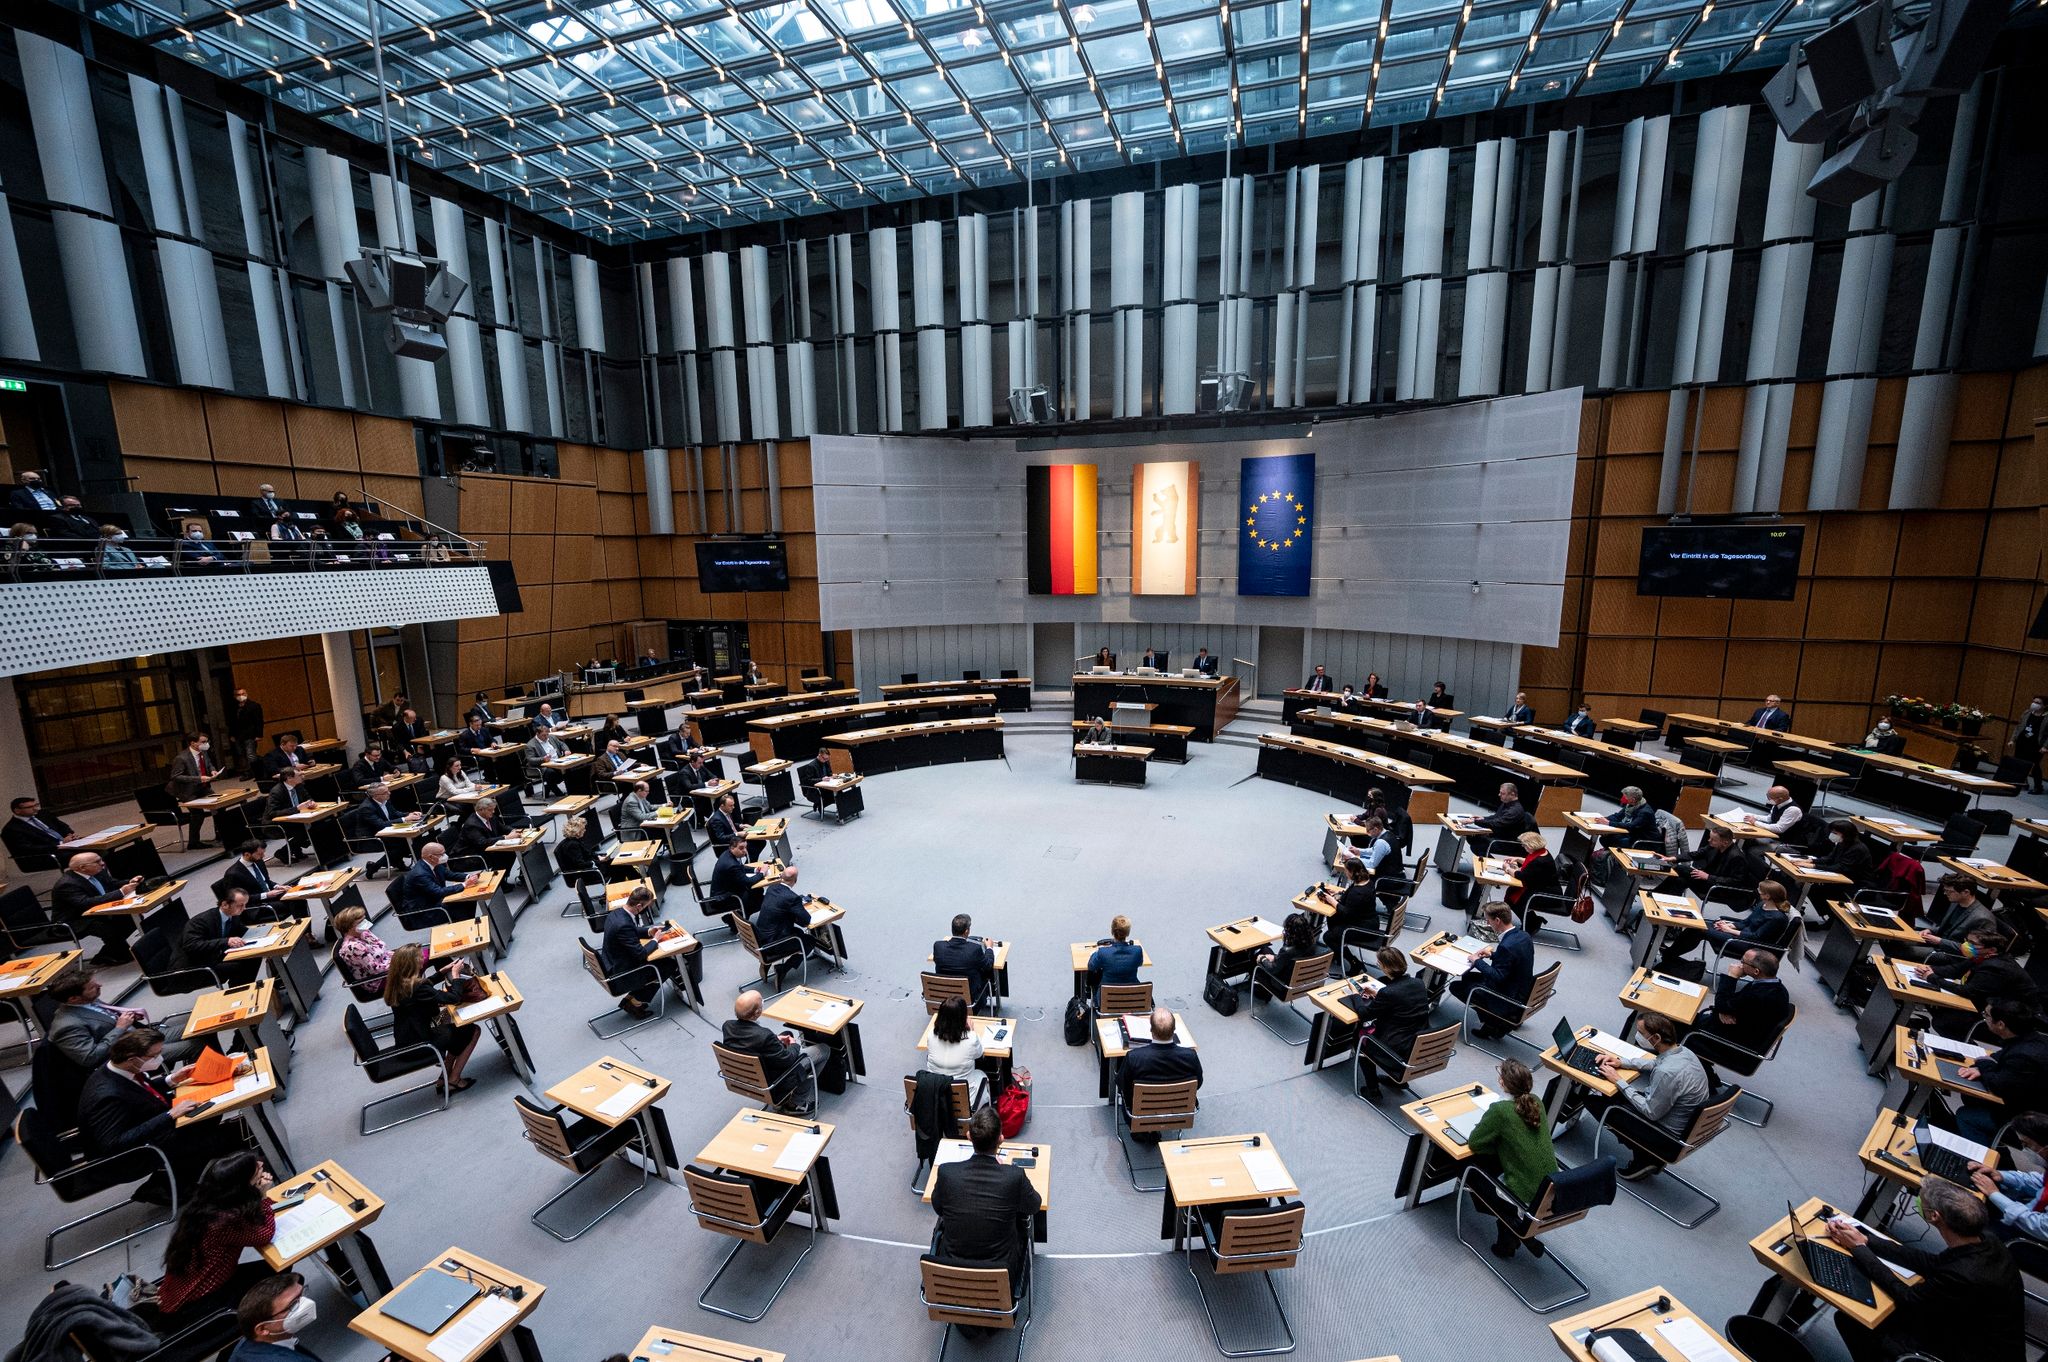 Abgeordnete stehen im Plenarsaal des Berliner Abgeordnetenhauses.